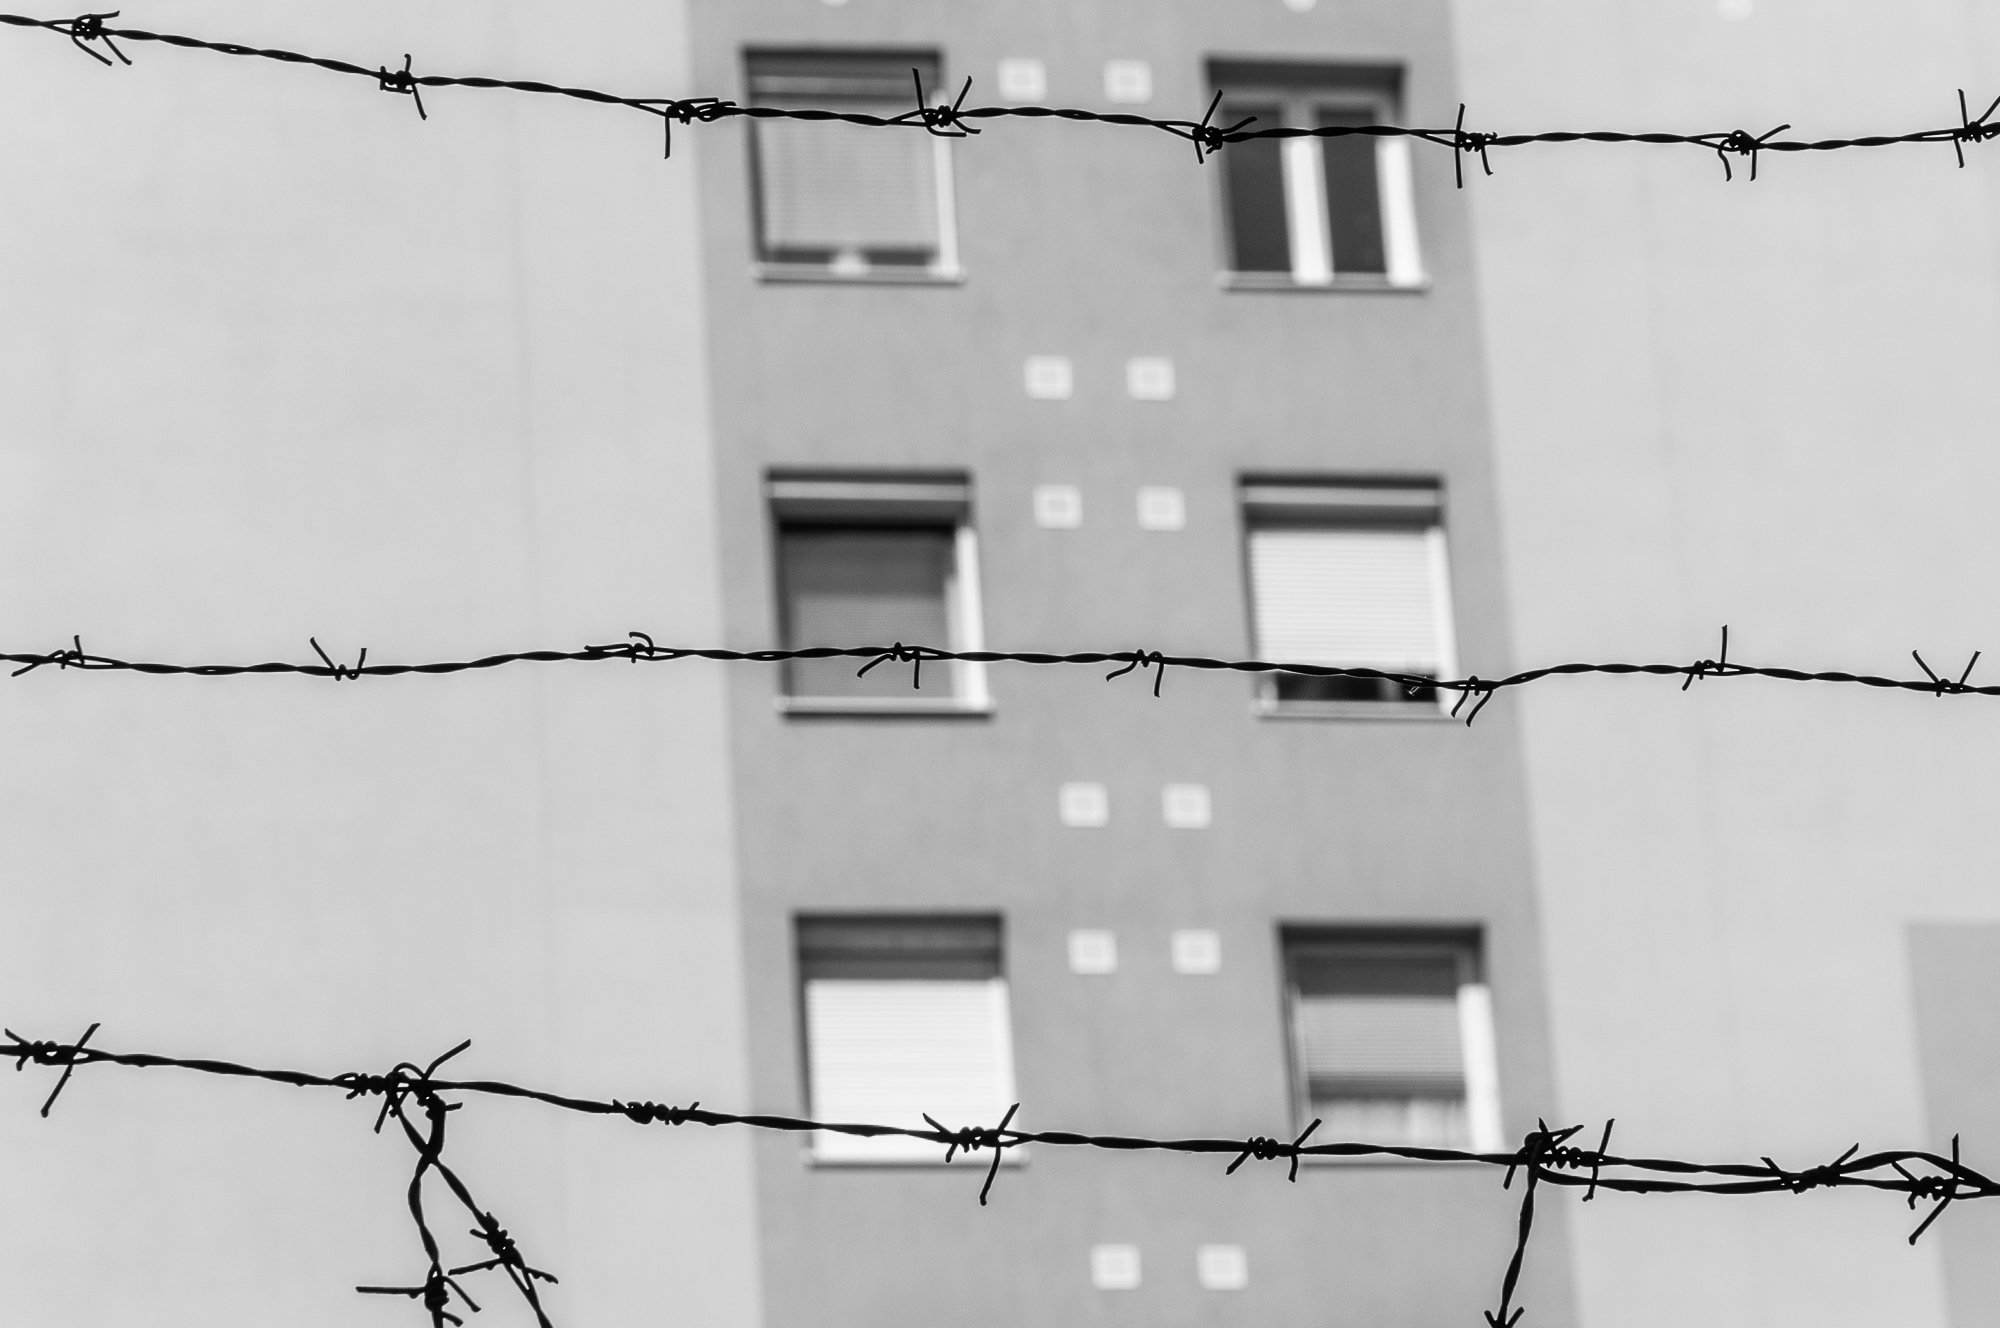 Adam Mazek Photography Budapest (Hungary) 2018. Post: "Hunting." Minimalism. Wire fence and windows.